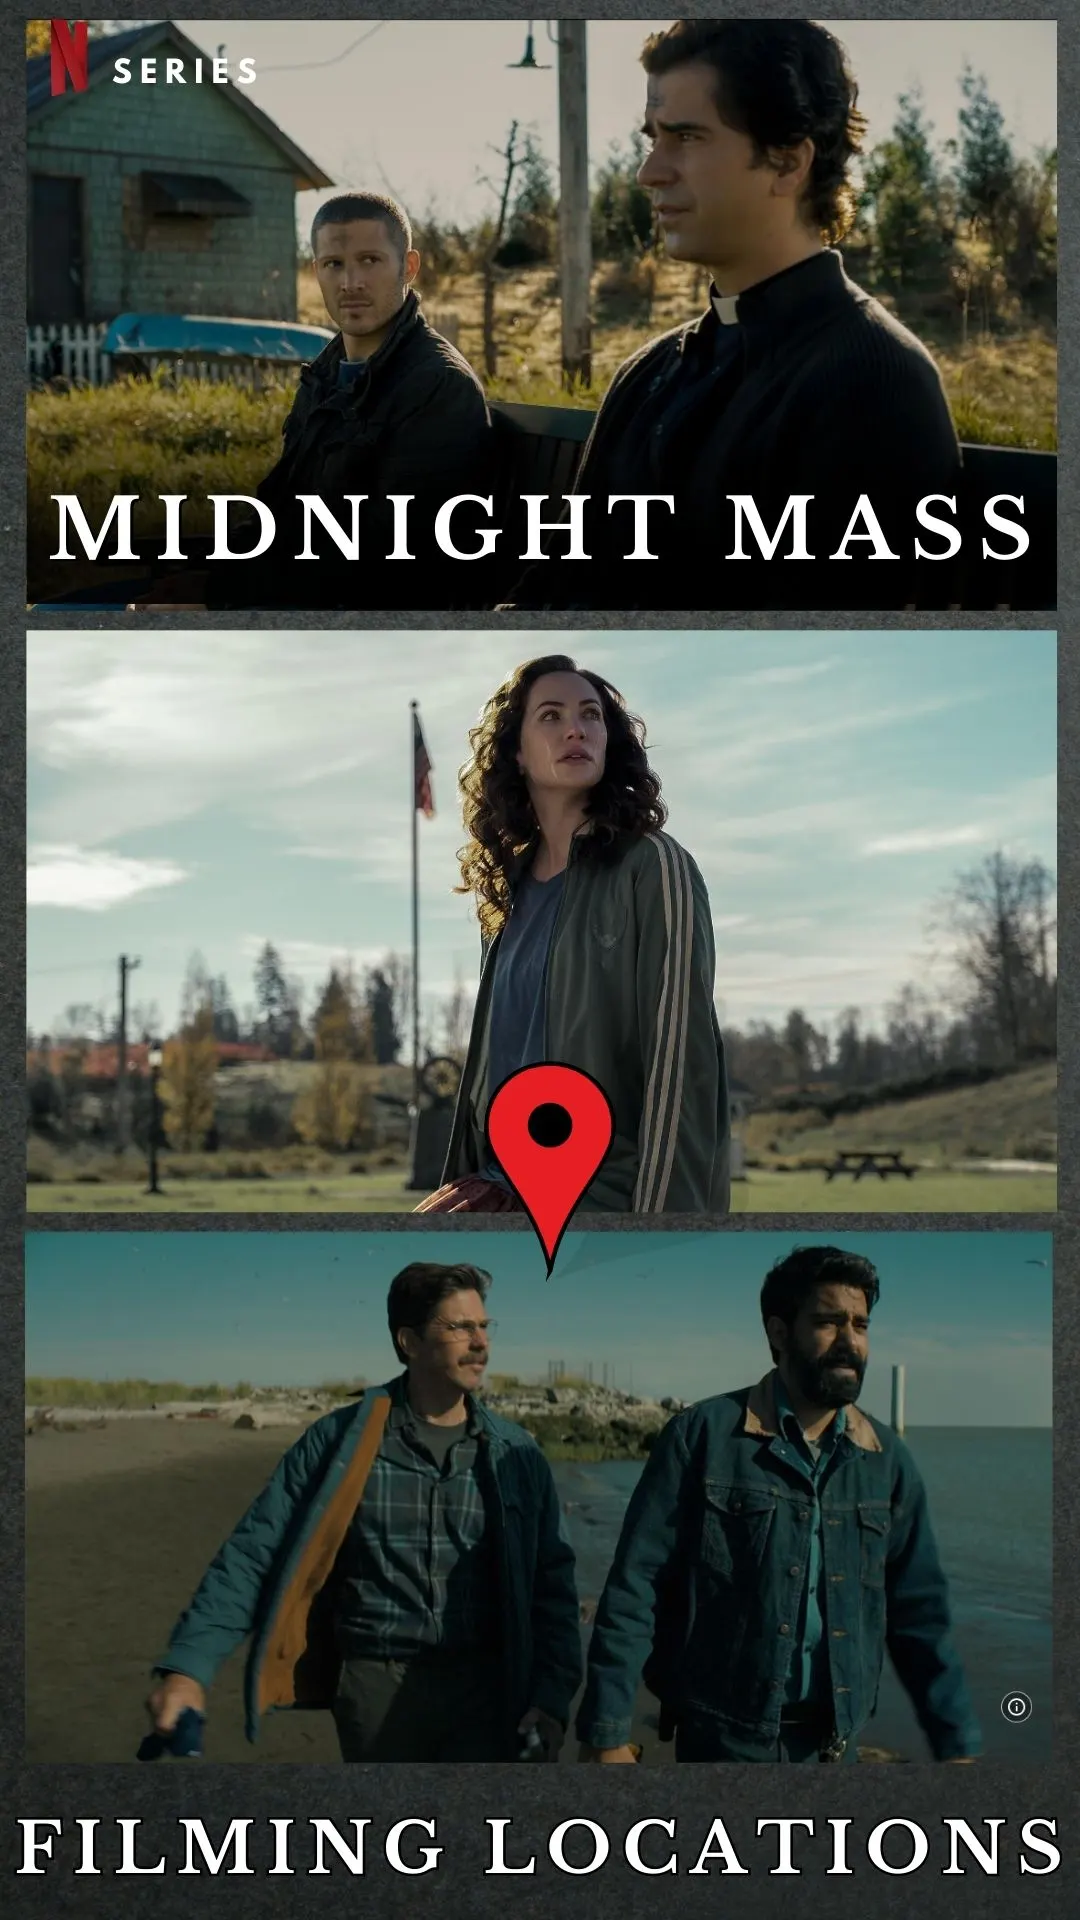 Midnight Mass Filming Locations